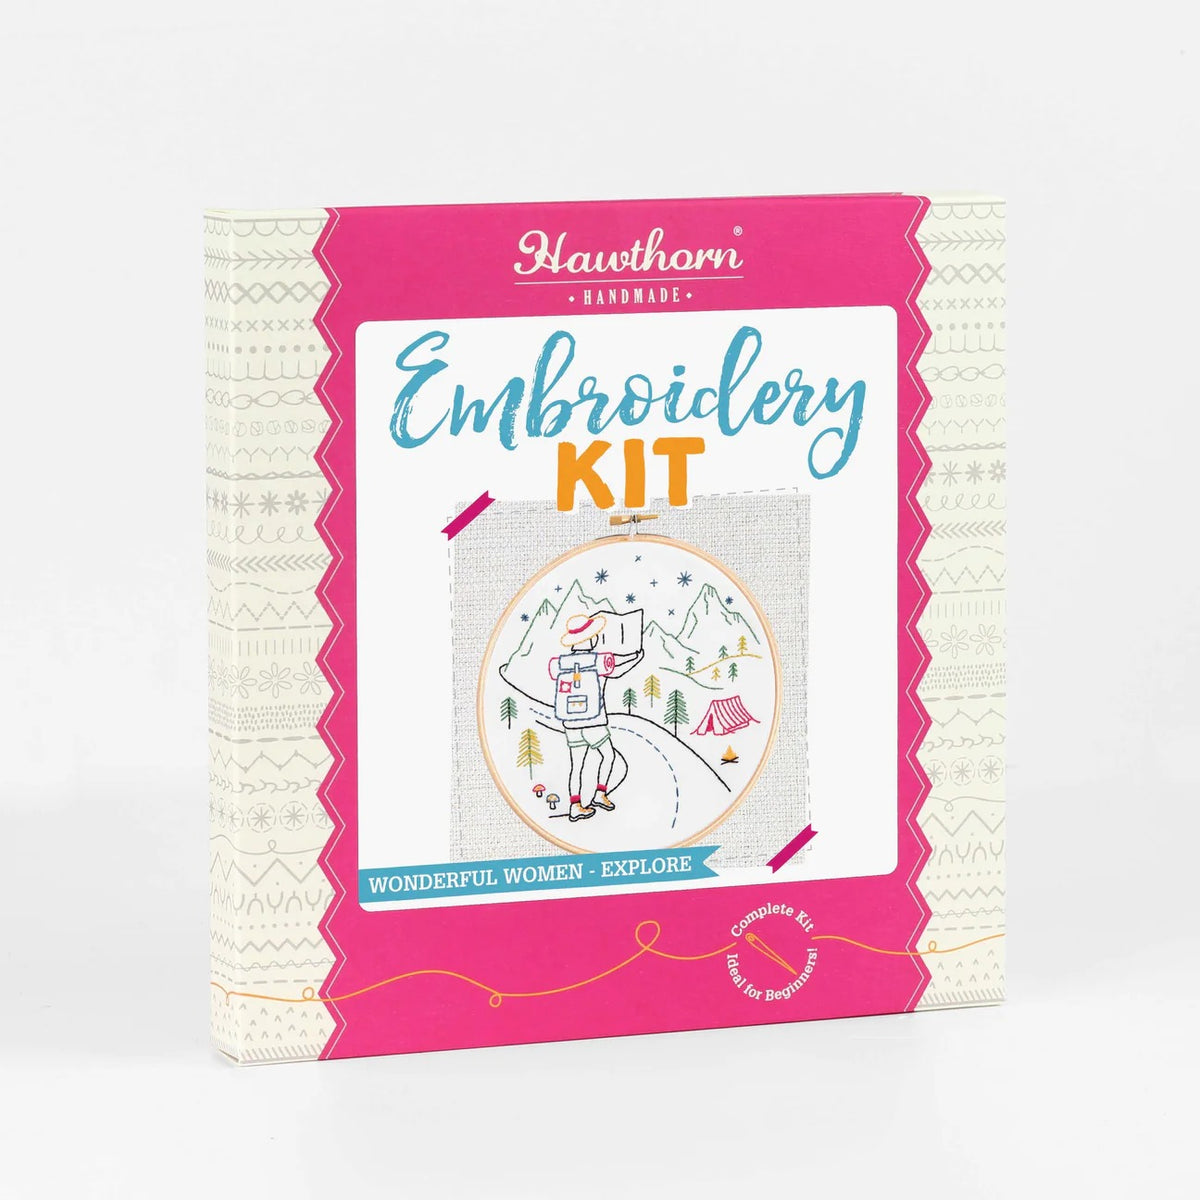 Wonderful Women Hand Embroidery Kit - Explore